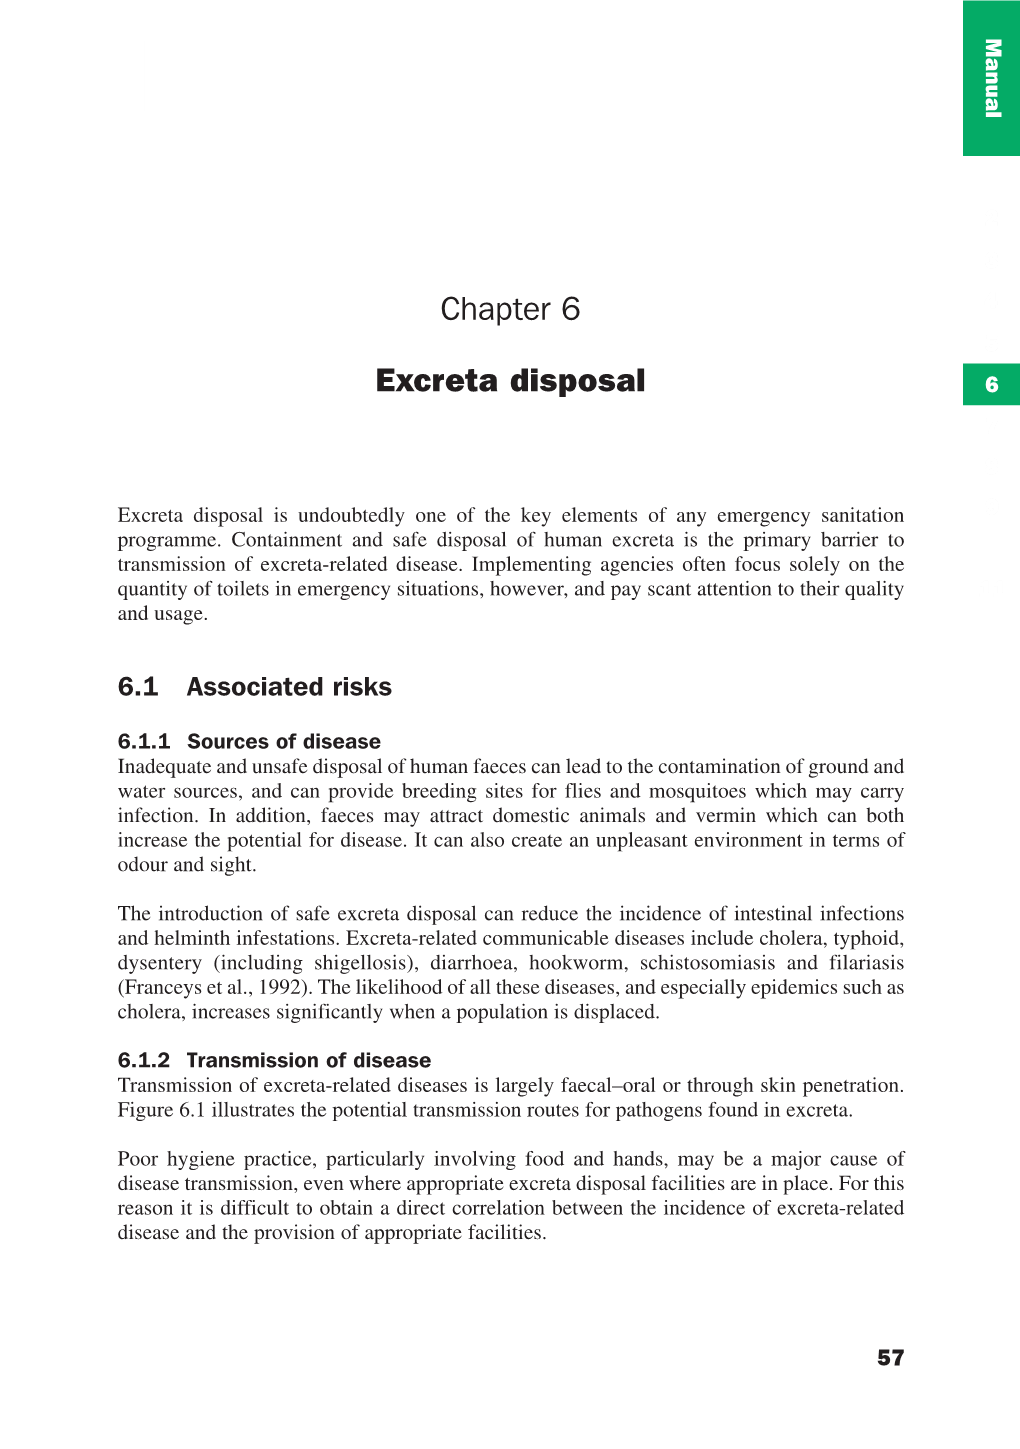 Chapter 6 Excreta Disposal